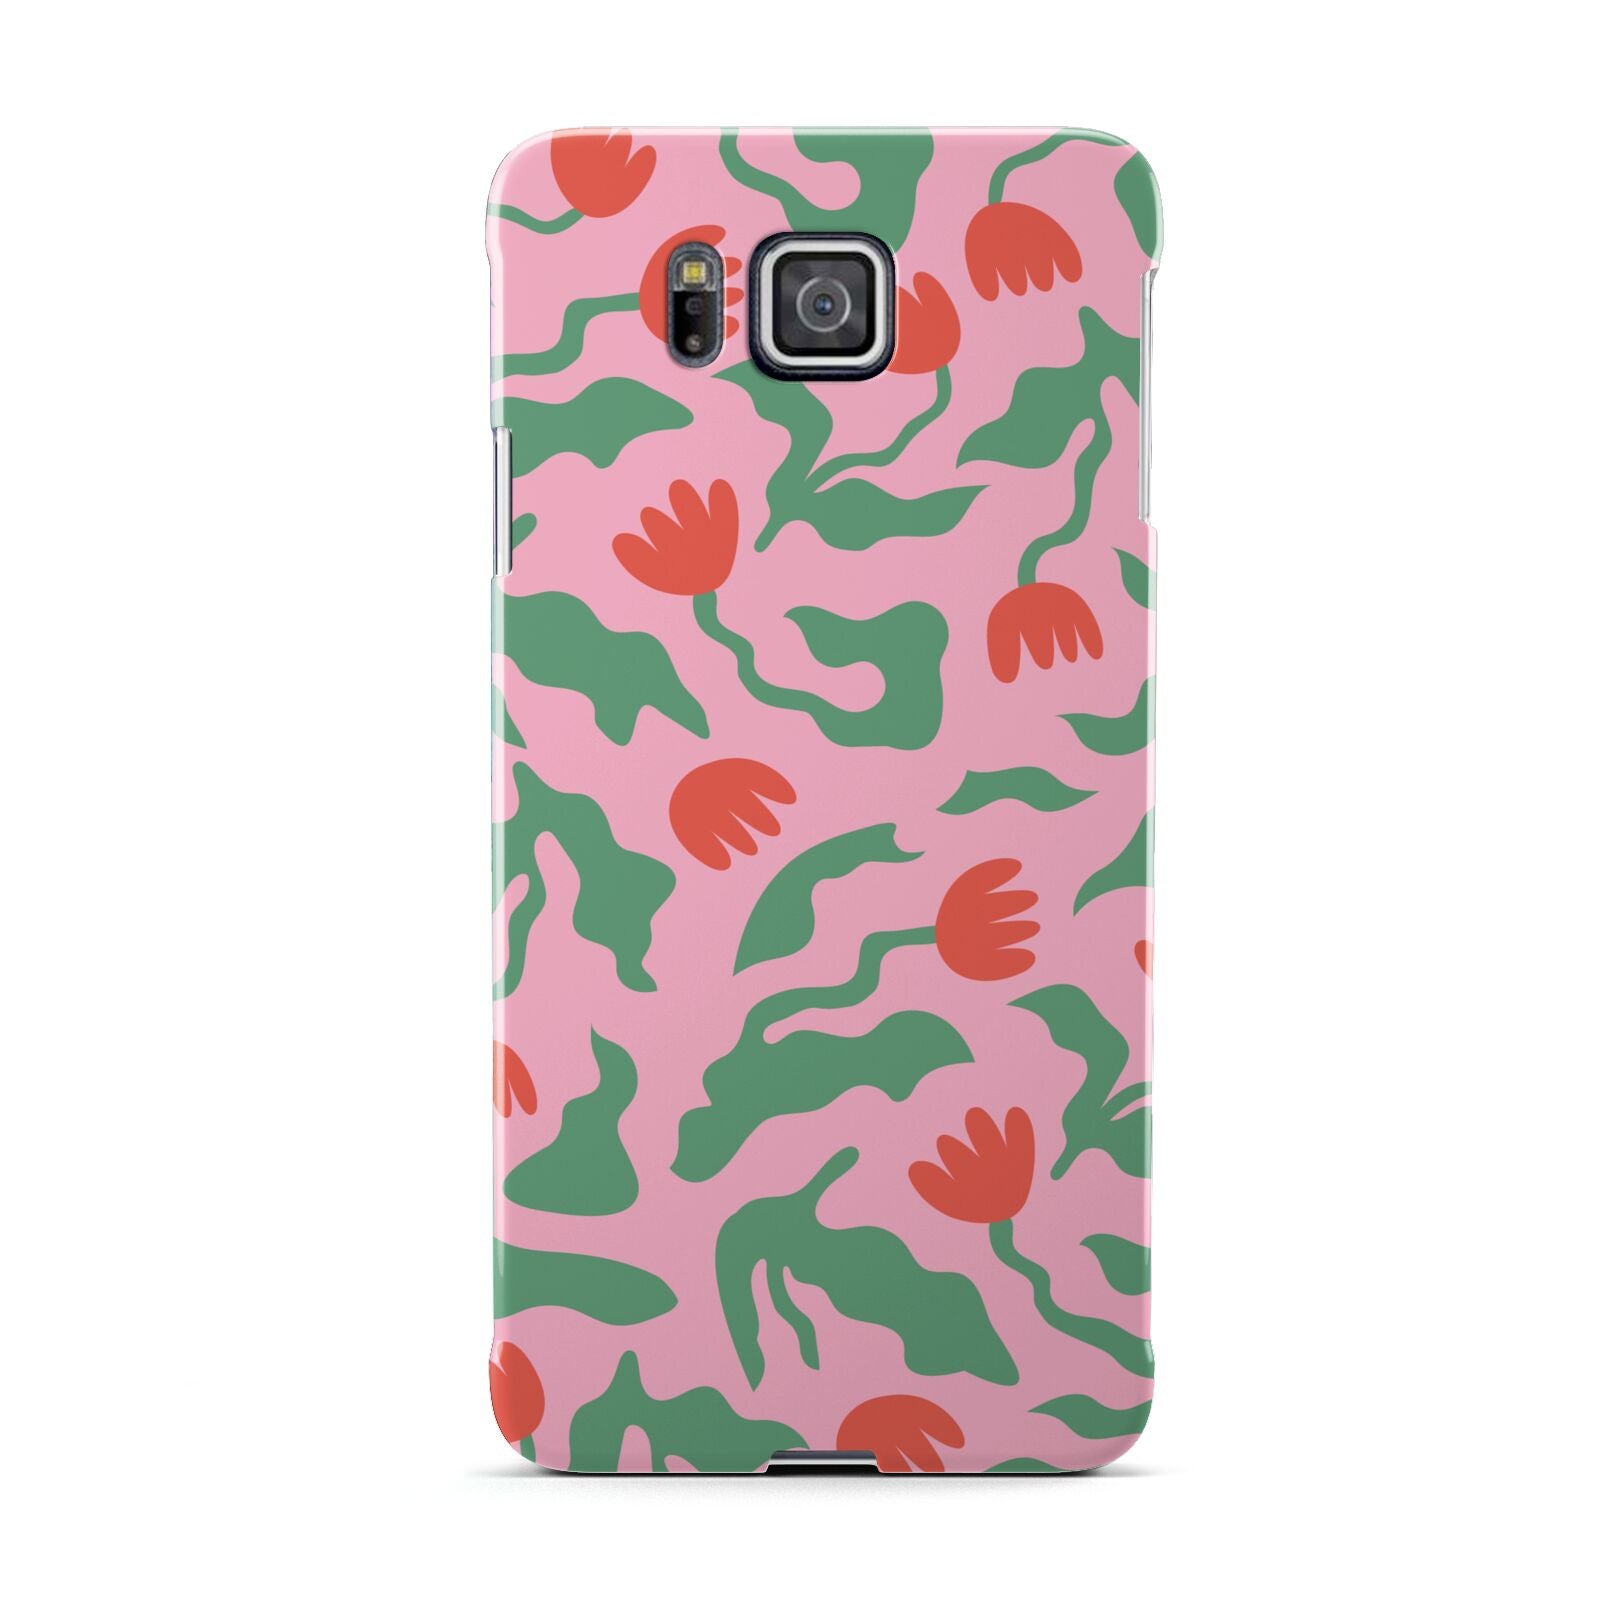 Simple Floral Samsung Galaxy Alpha Case